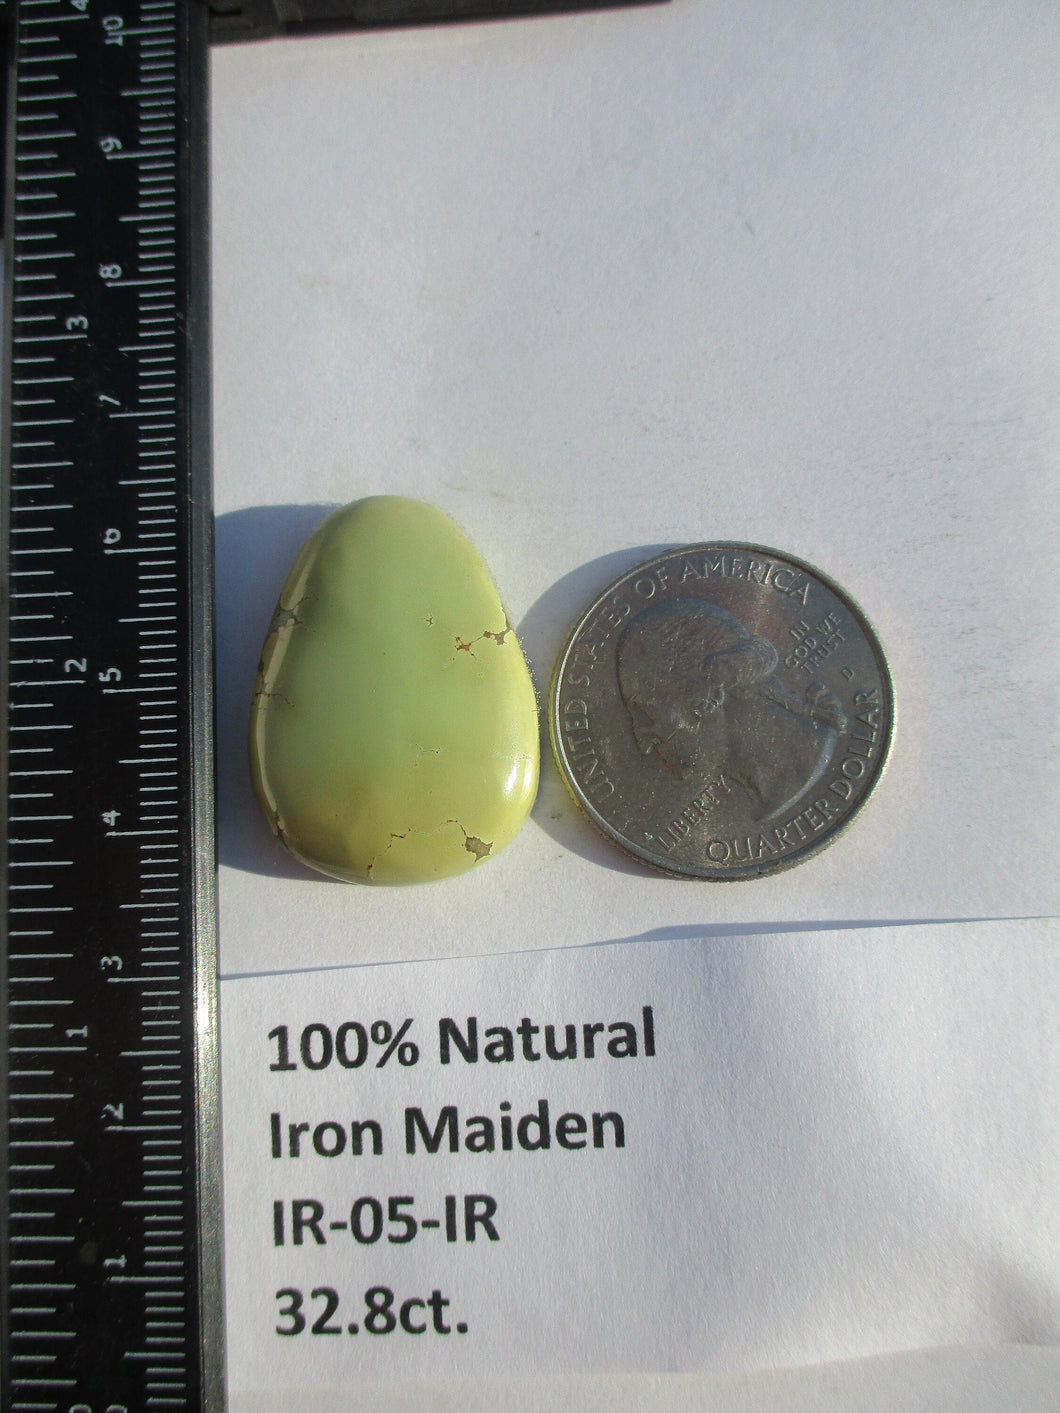 32.8 ct. (28x20.5x7.5 mm) 100% Natural Iron Maiden Turquoise Cabochon Gemstone, # IR 05